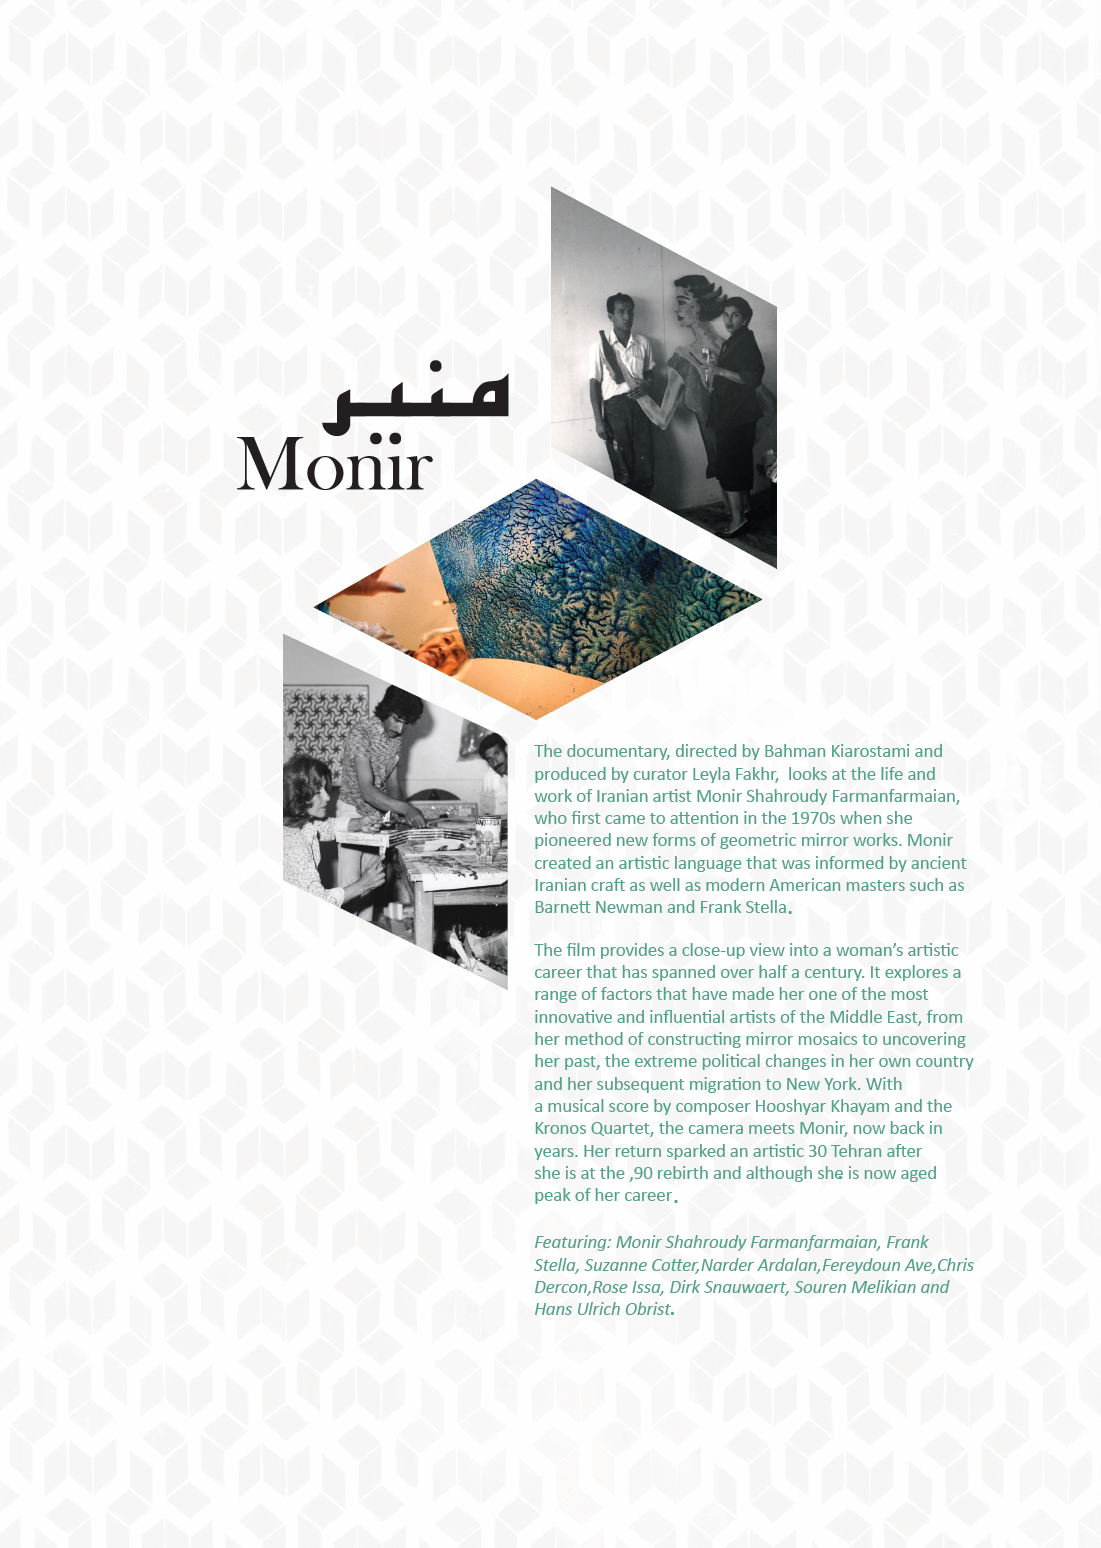 Monir type english persian mix language design video festival New York London dvd cover